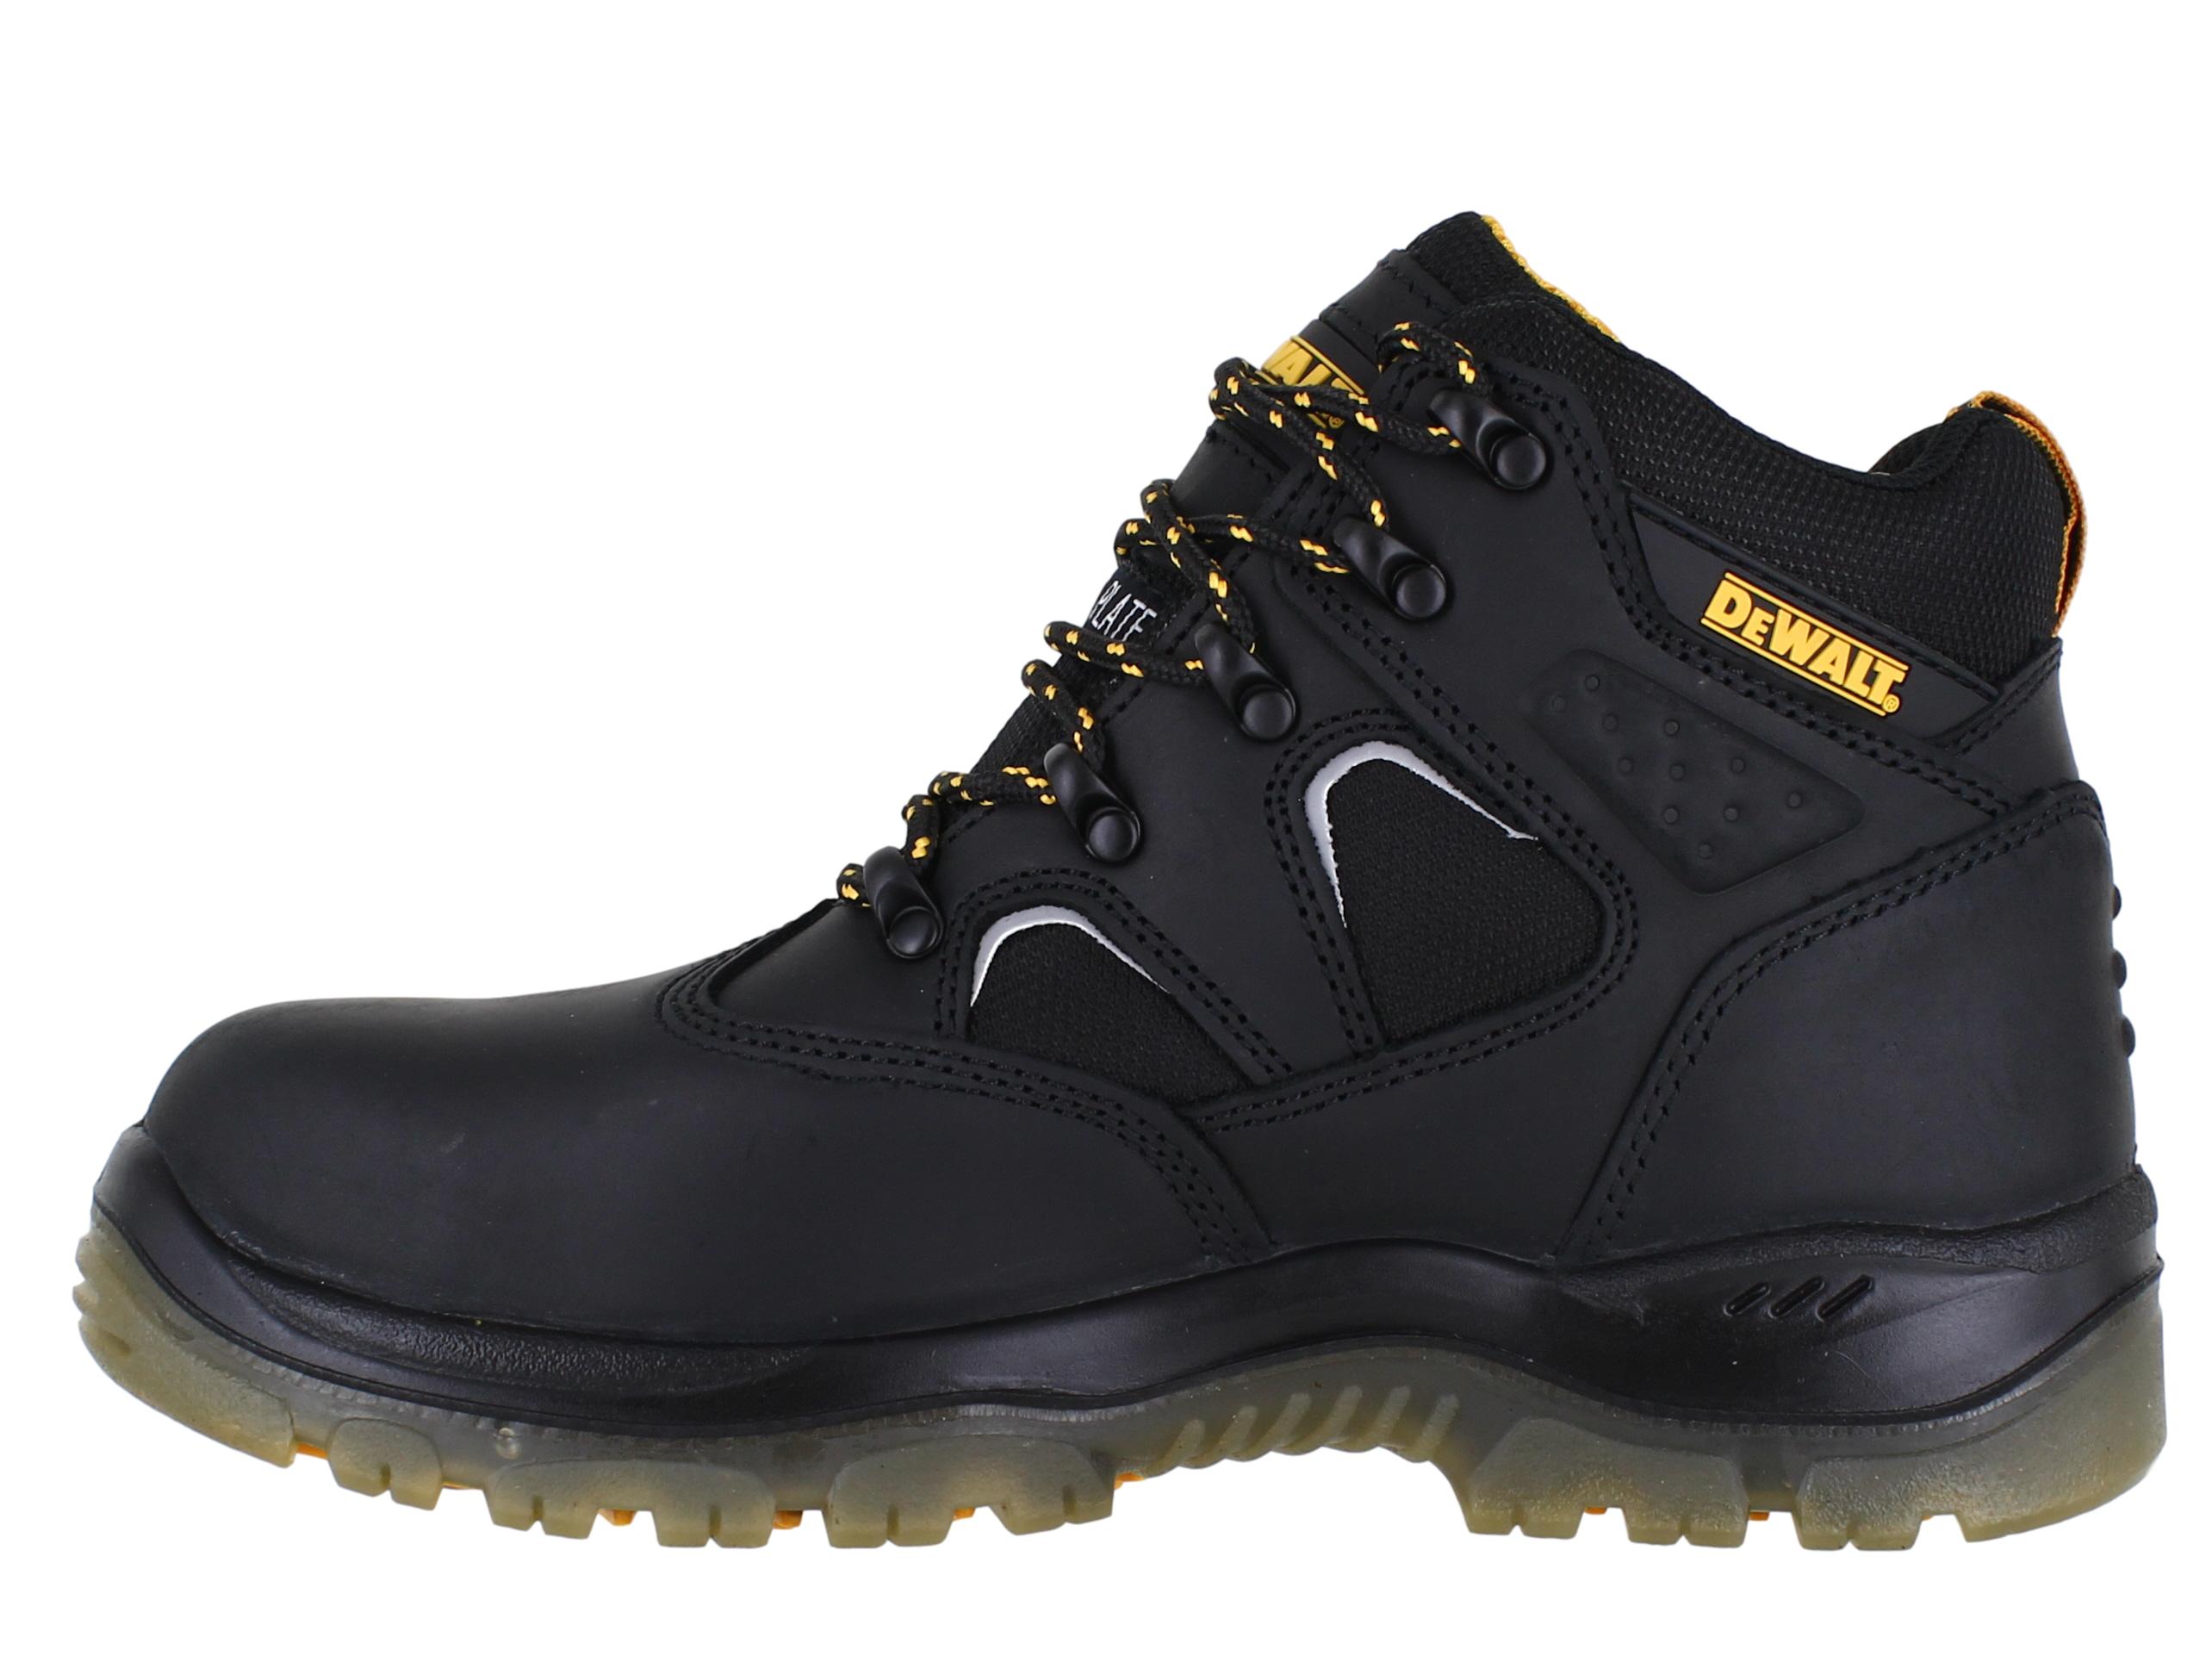 Mens DeWalt Challenger Waterproof Safety S3 Steel Toe Work Boots Sizes 6 to 12 | eBay